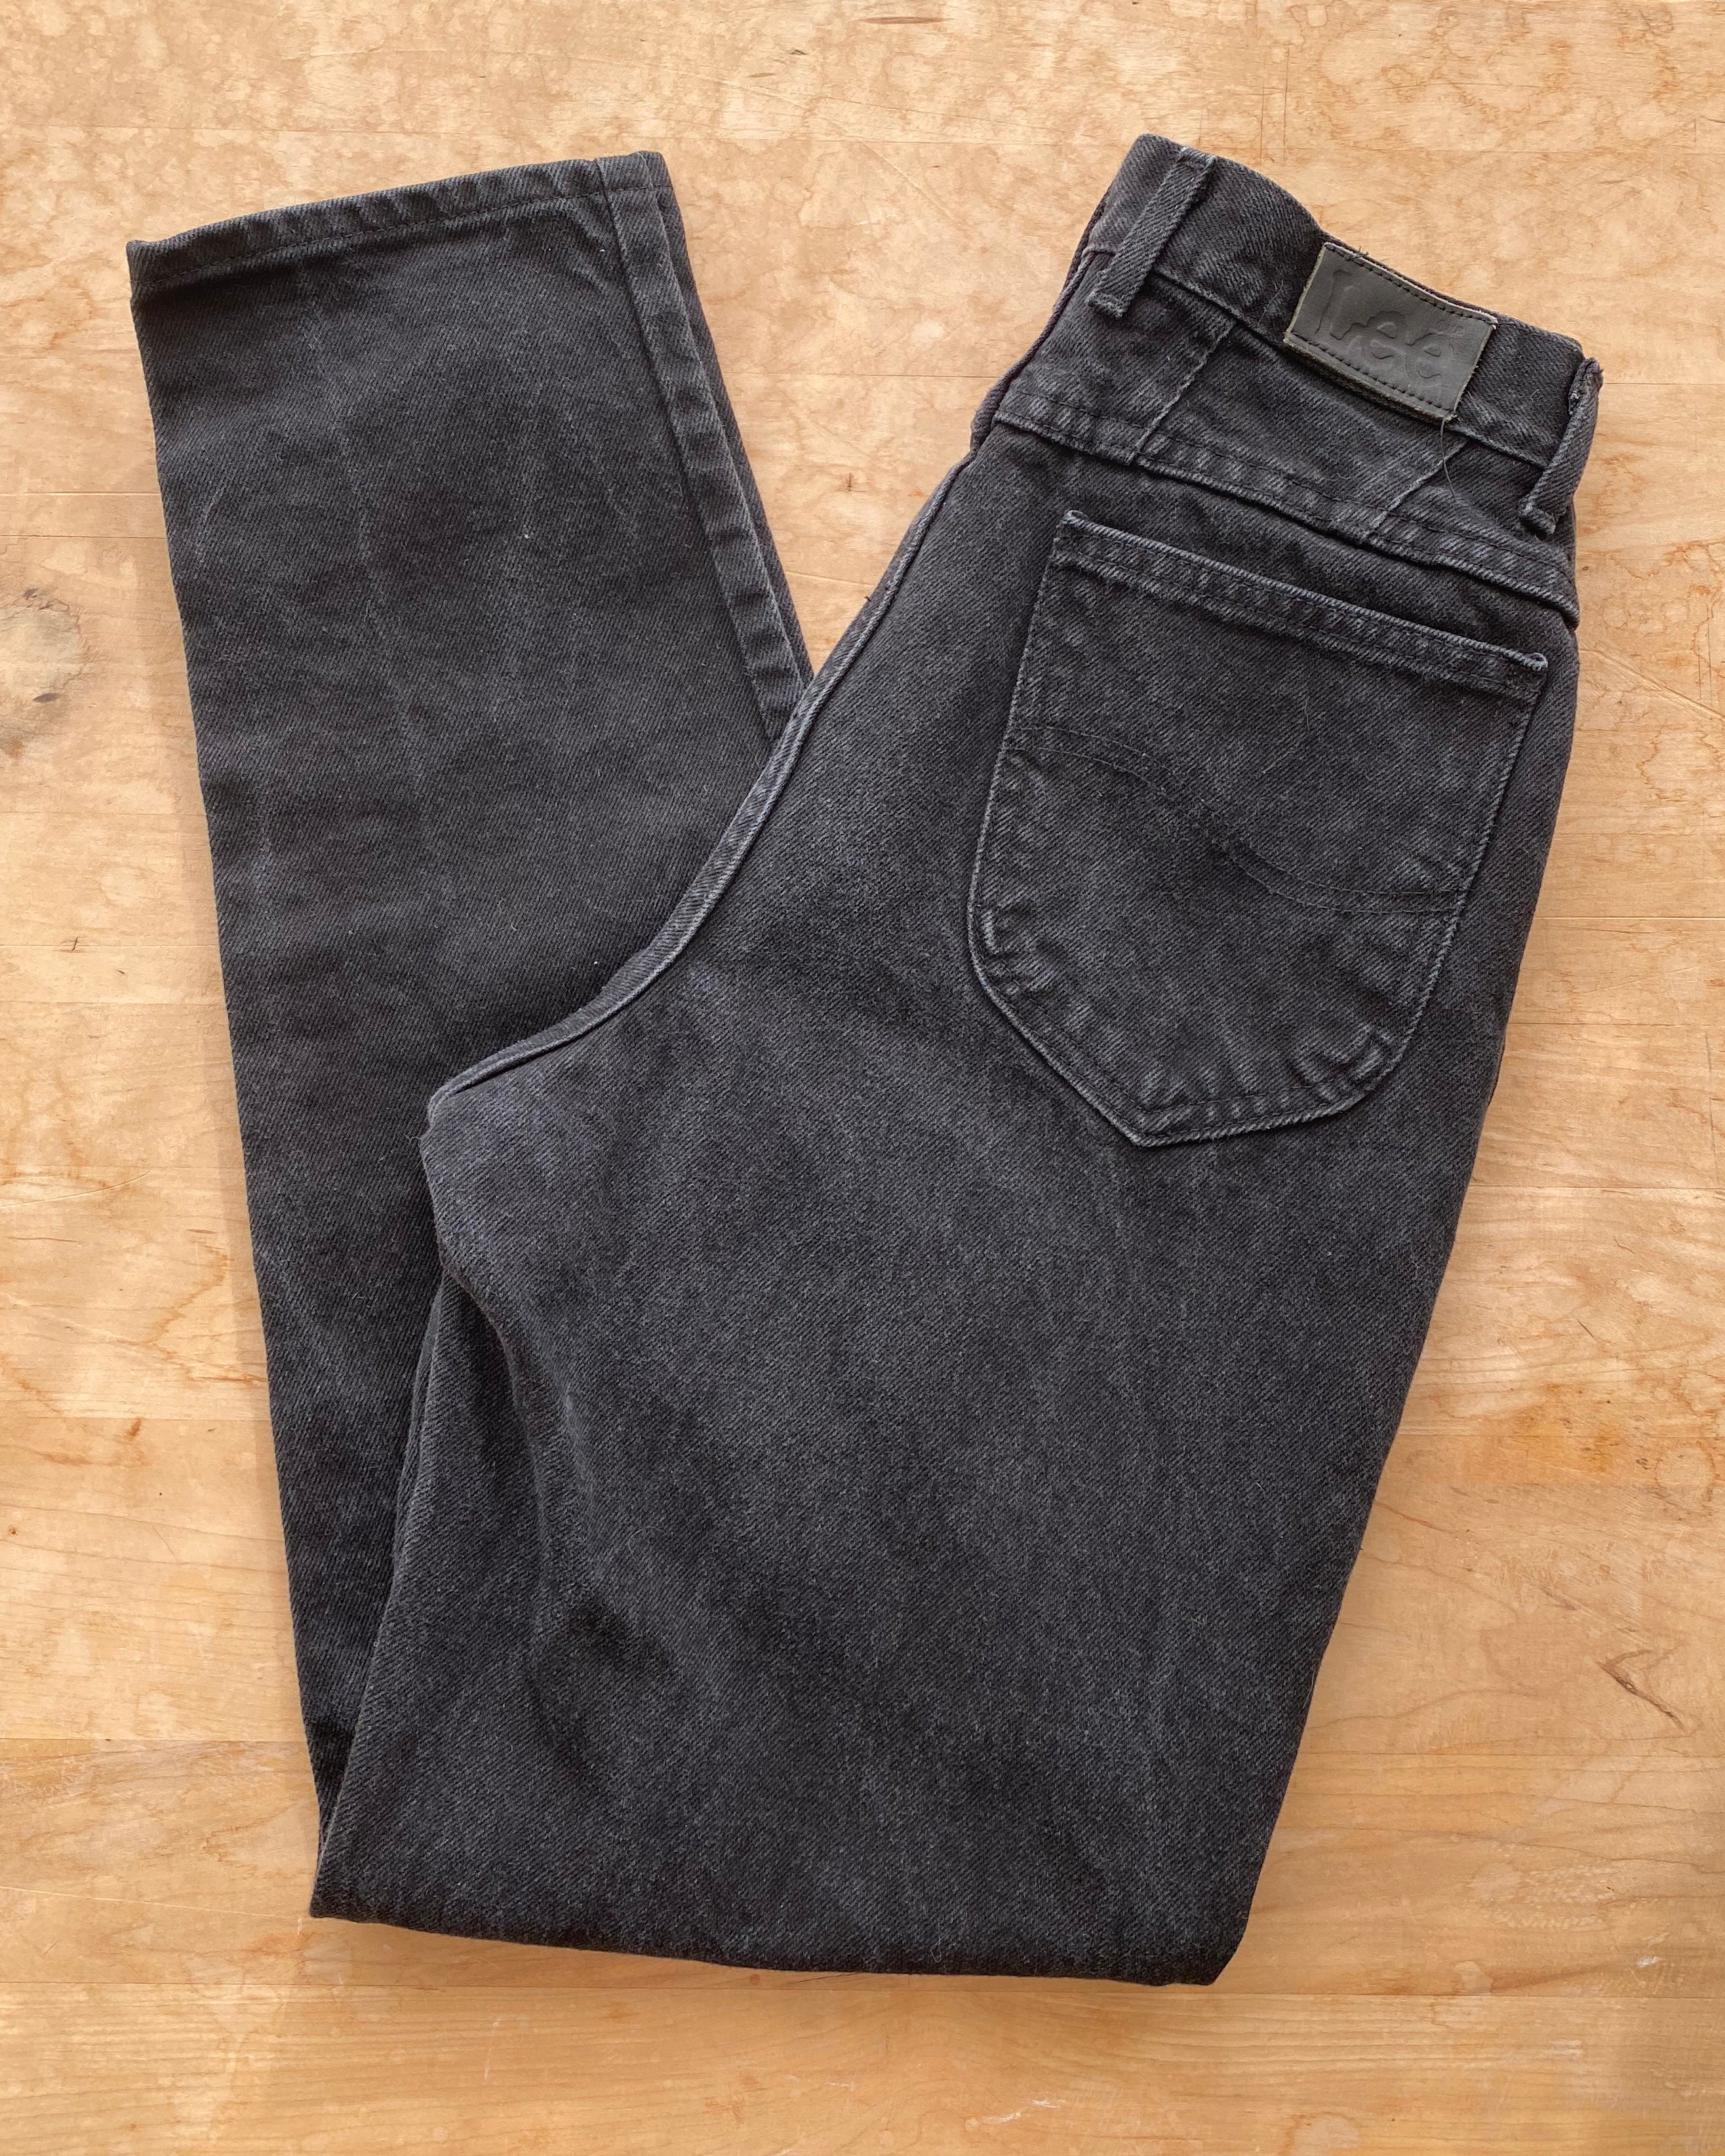 Vintage LEEs Made in USA Black Wash Jeans size 27